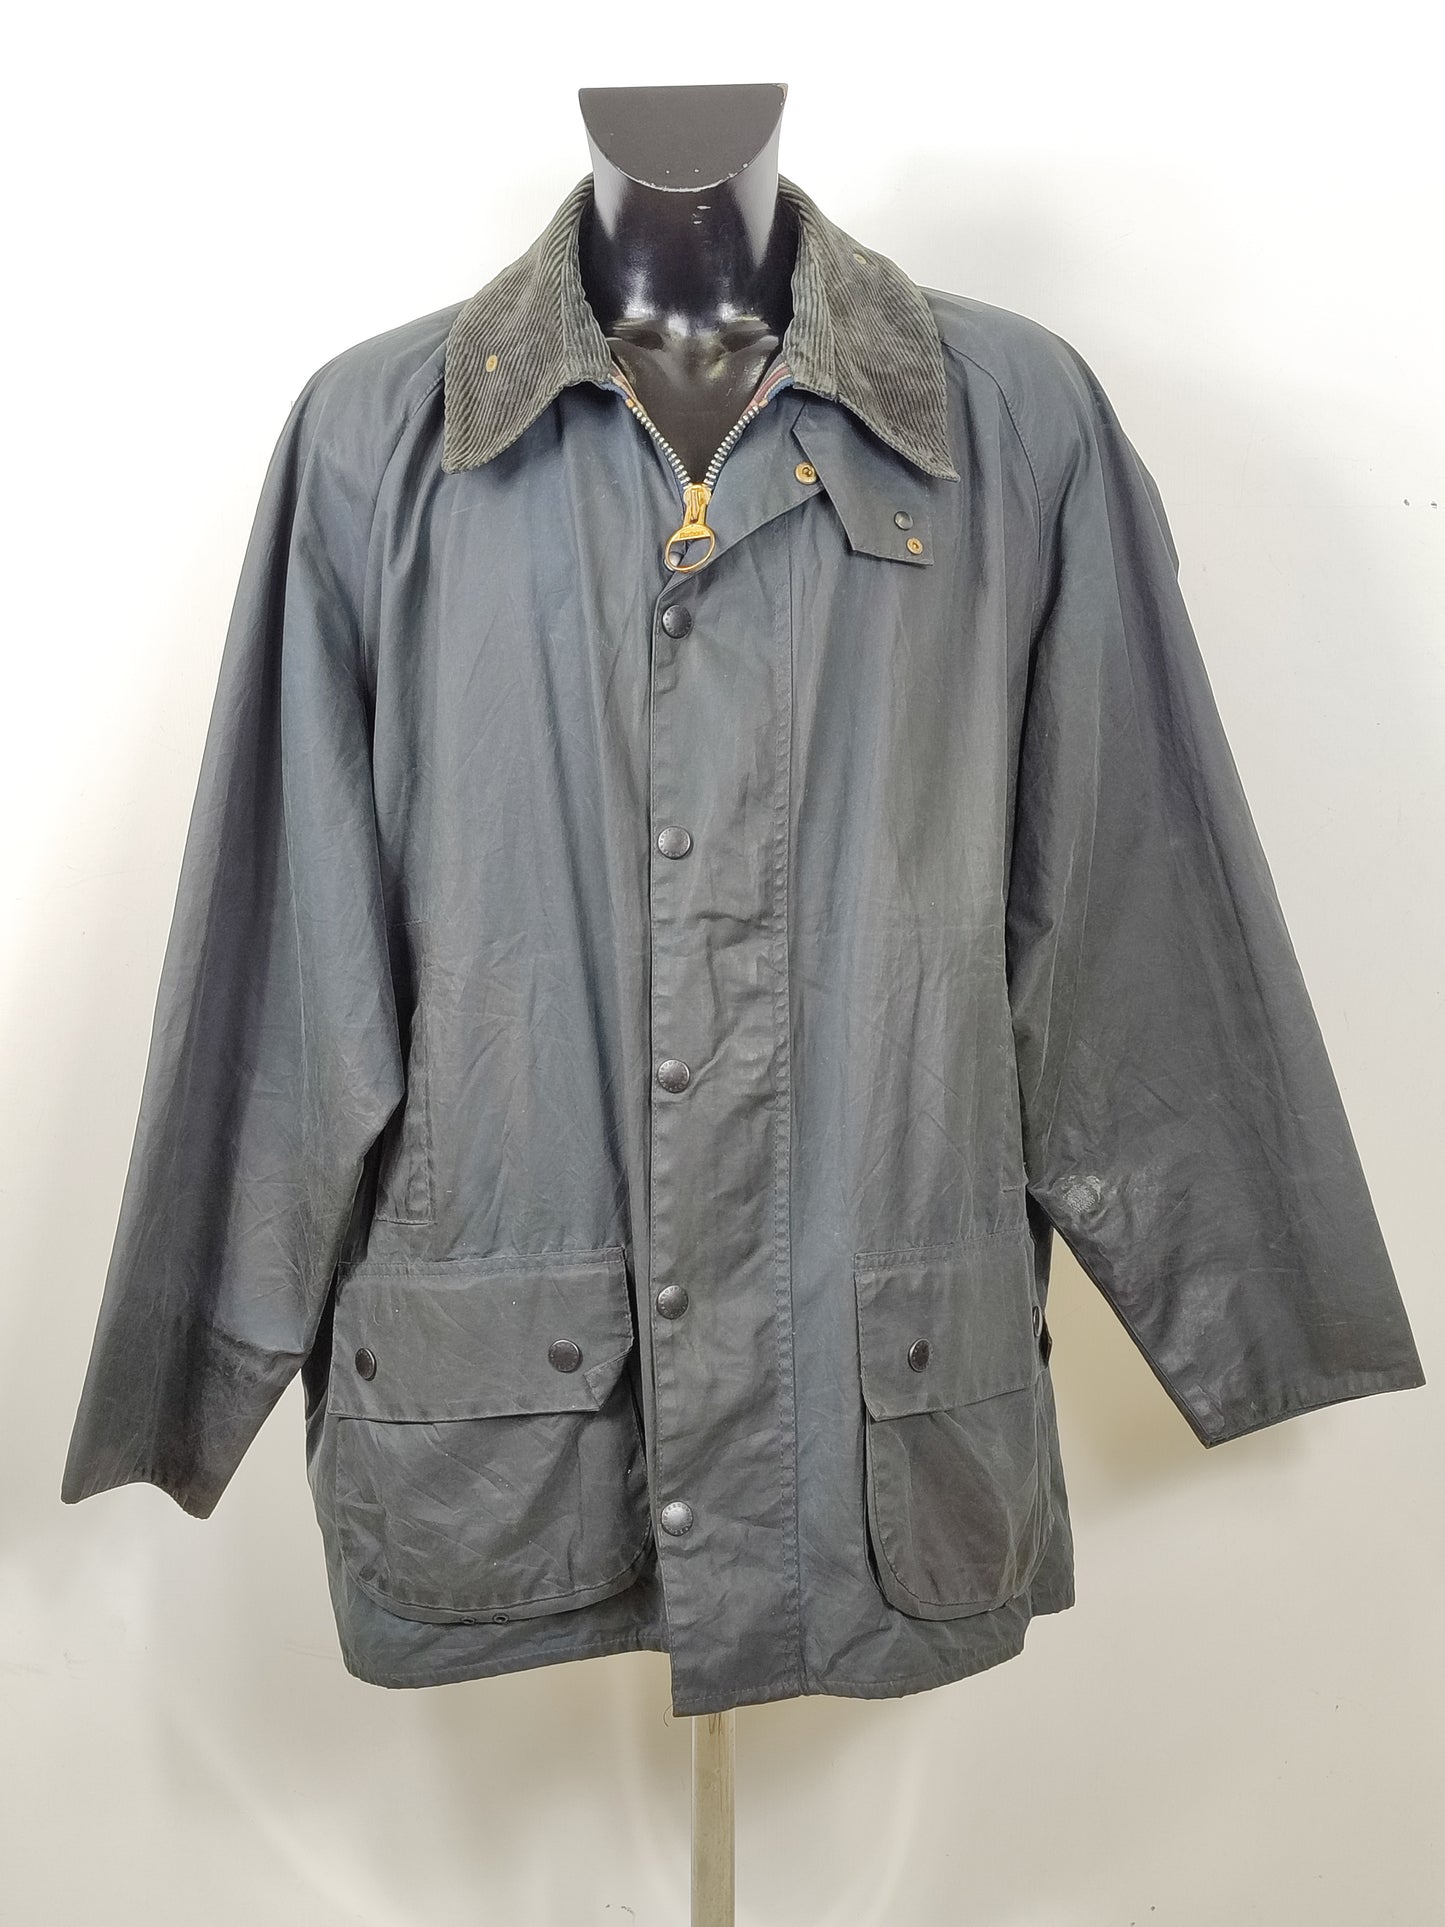 Barbour Giacca Beaufort vintage blu C52/132 cm Man Navy Wax Beaufort jacket XXXL